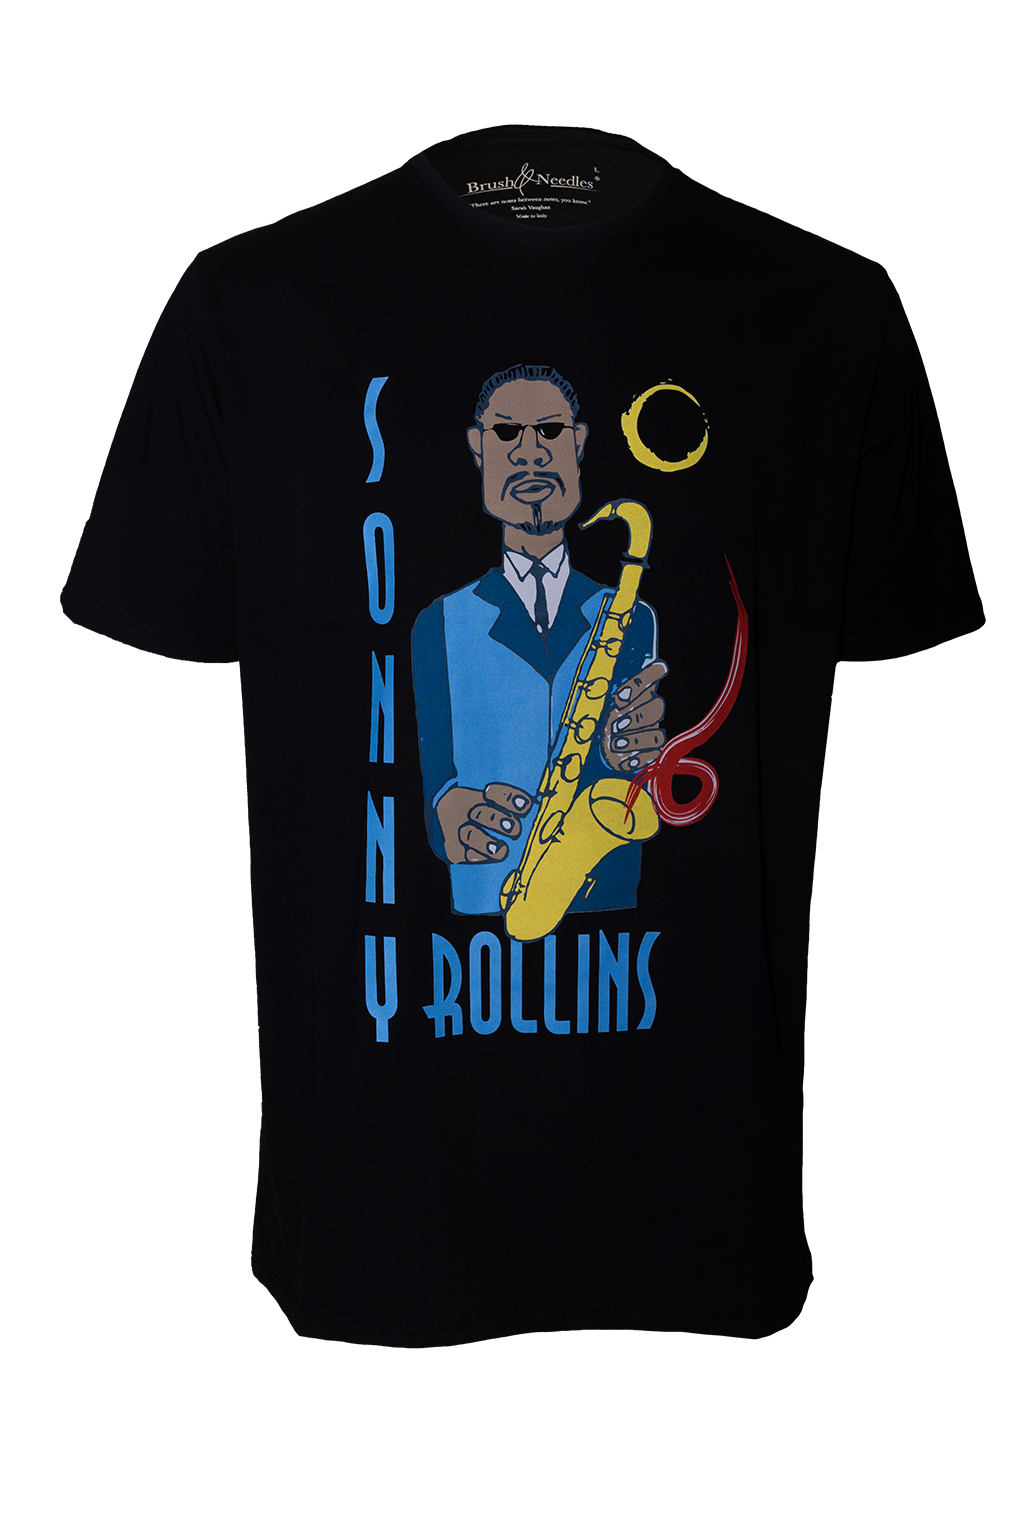 Sonny Rollins T-shirts